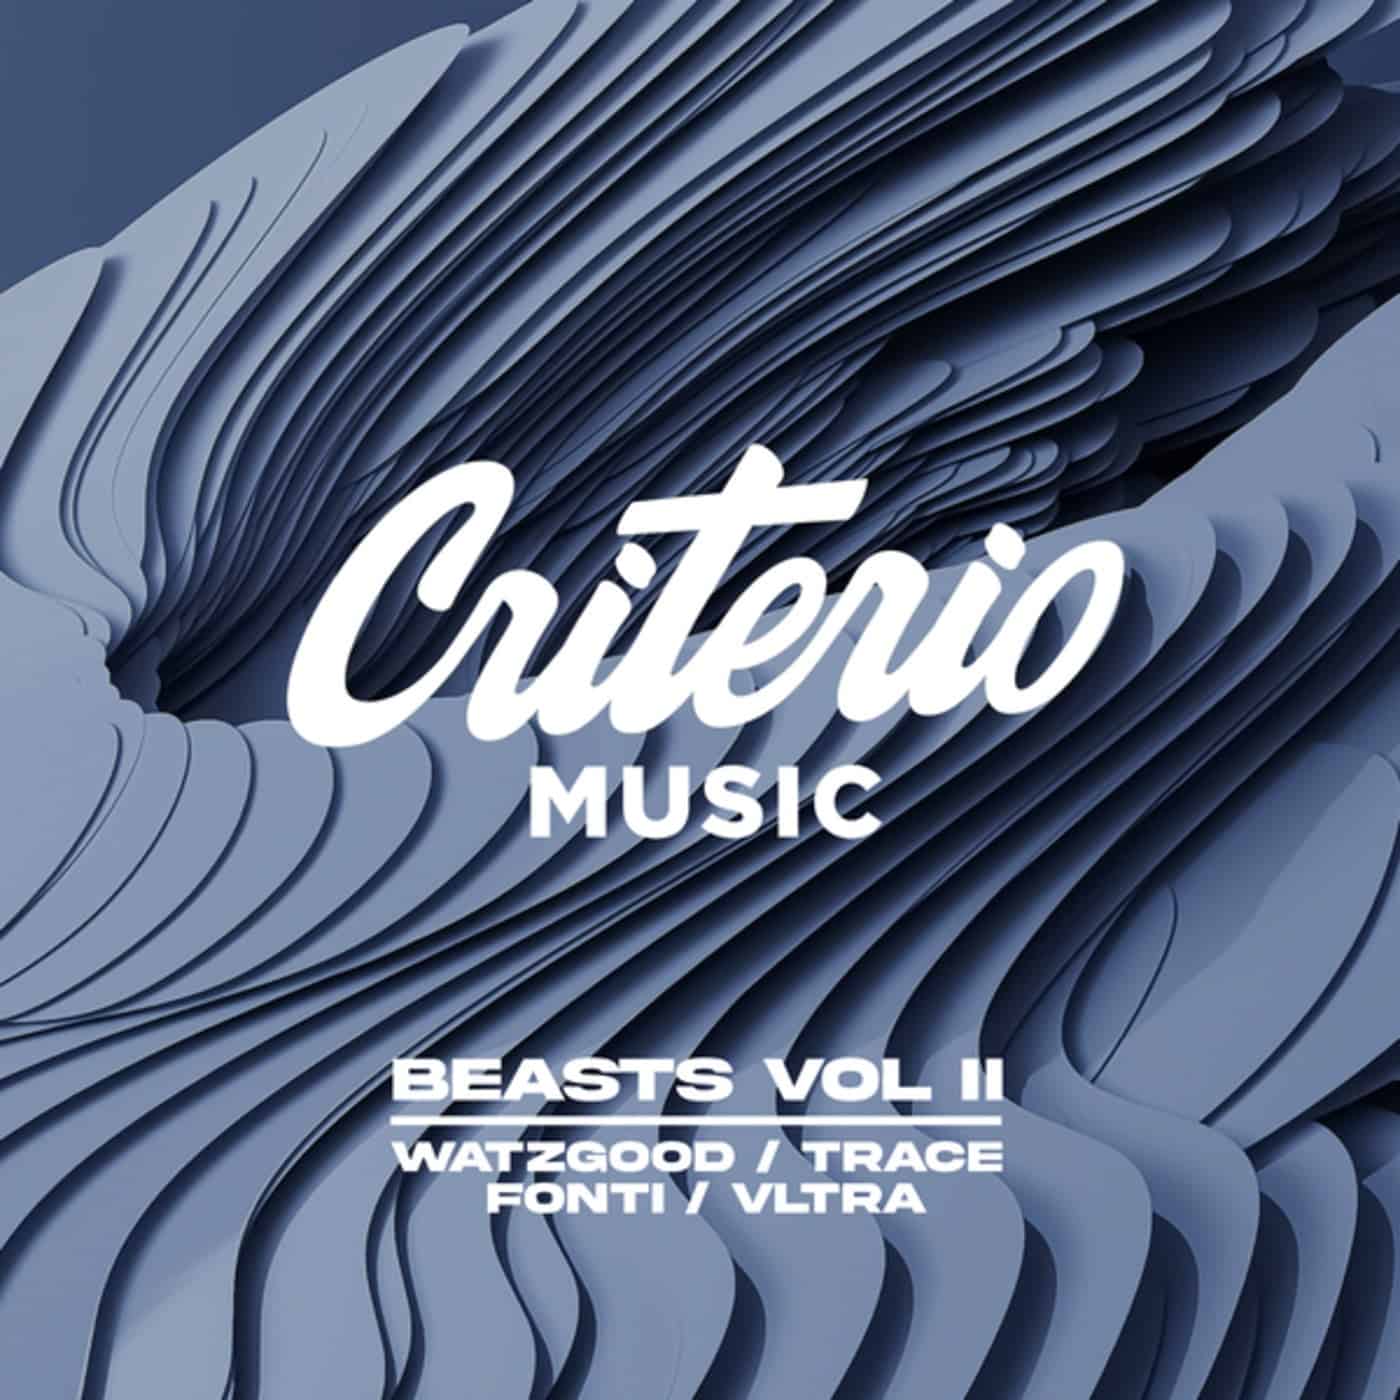 Download VA - Criterio Beasts Vol. II on Electrobuzz